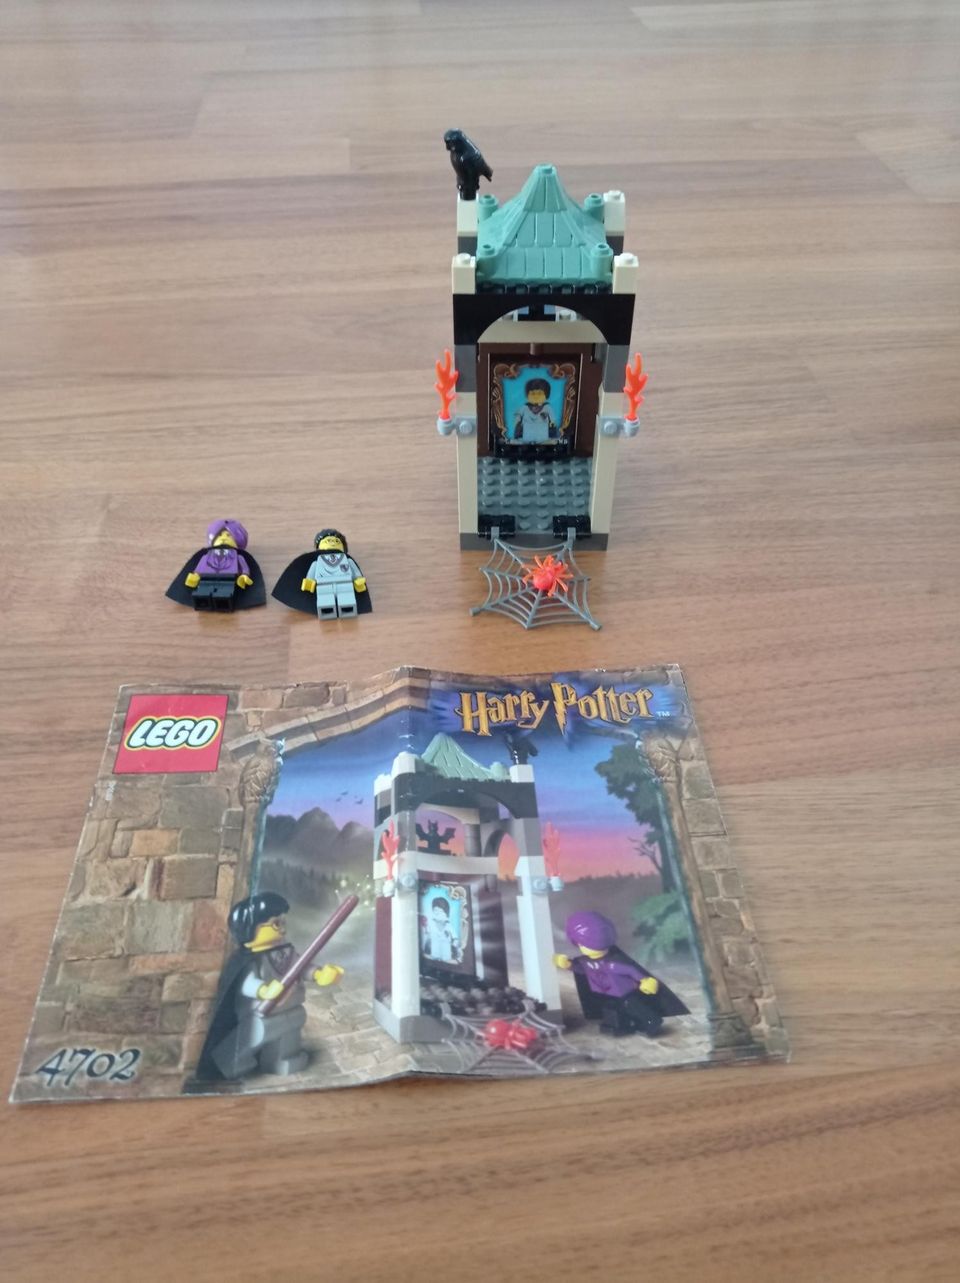 Harry Potter Lego 4702